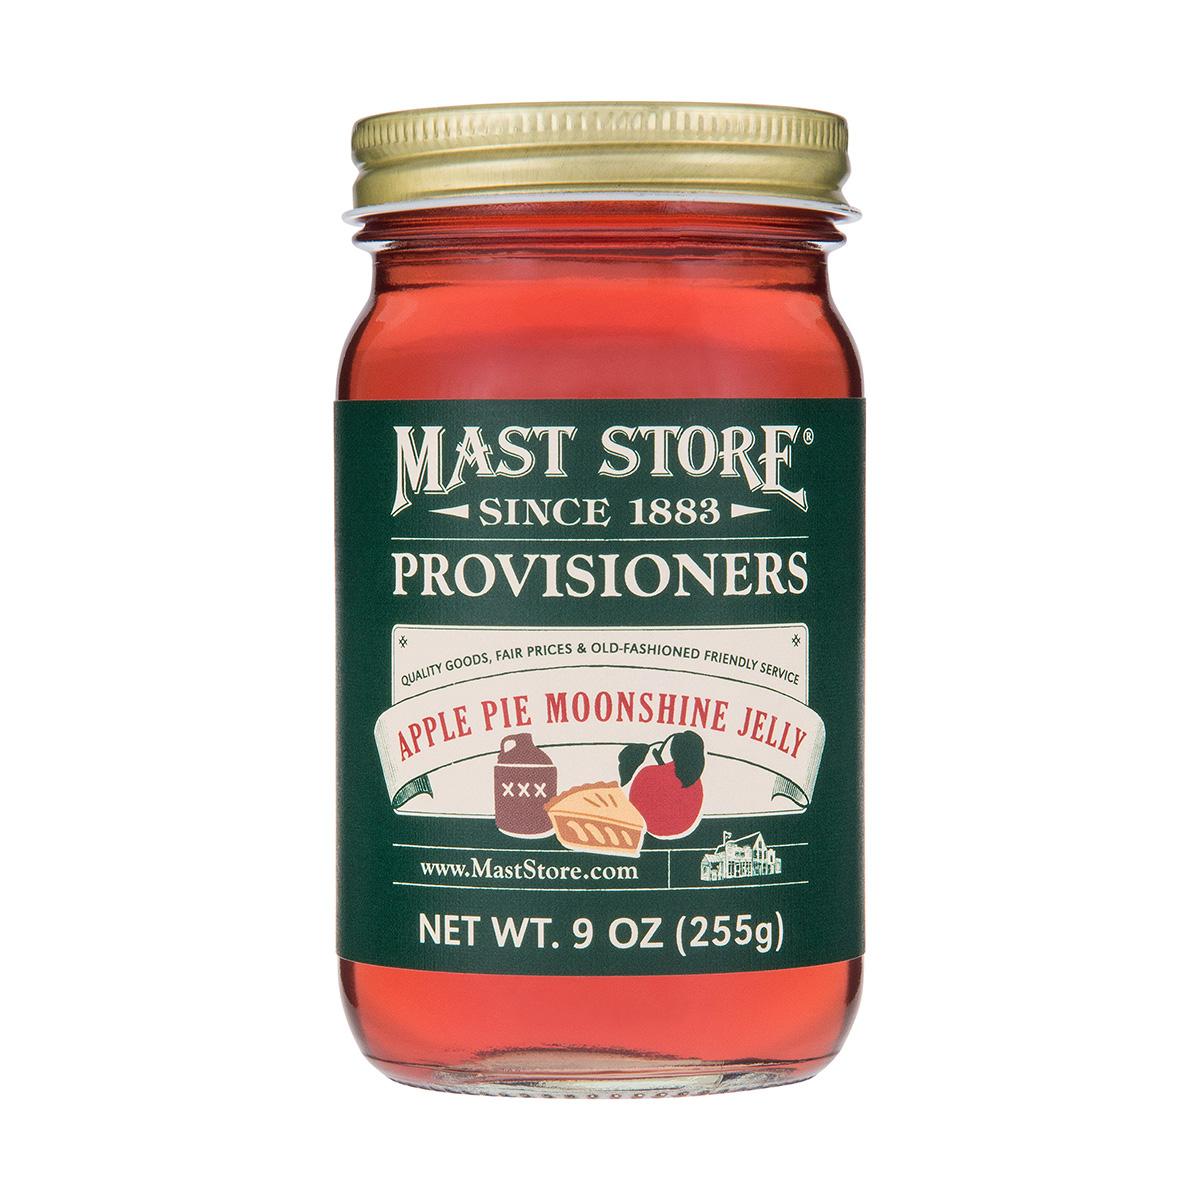  Mast Store Provisioners Apple Pie Moonshine Jelly